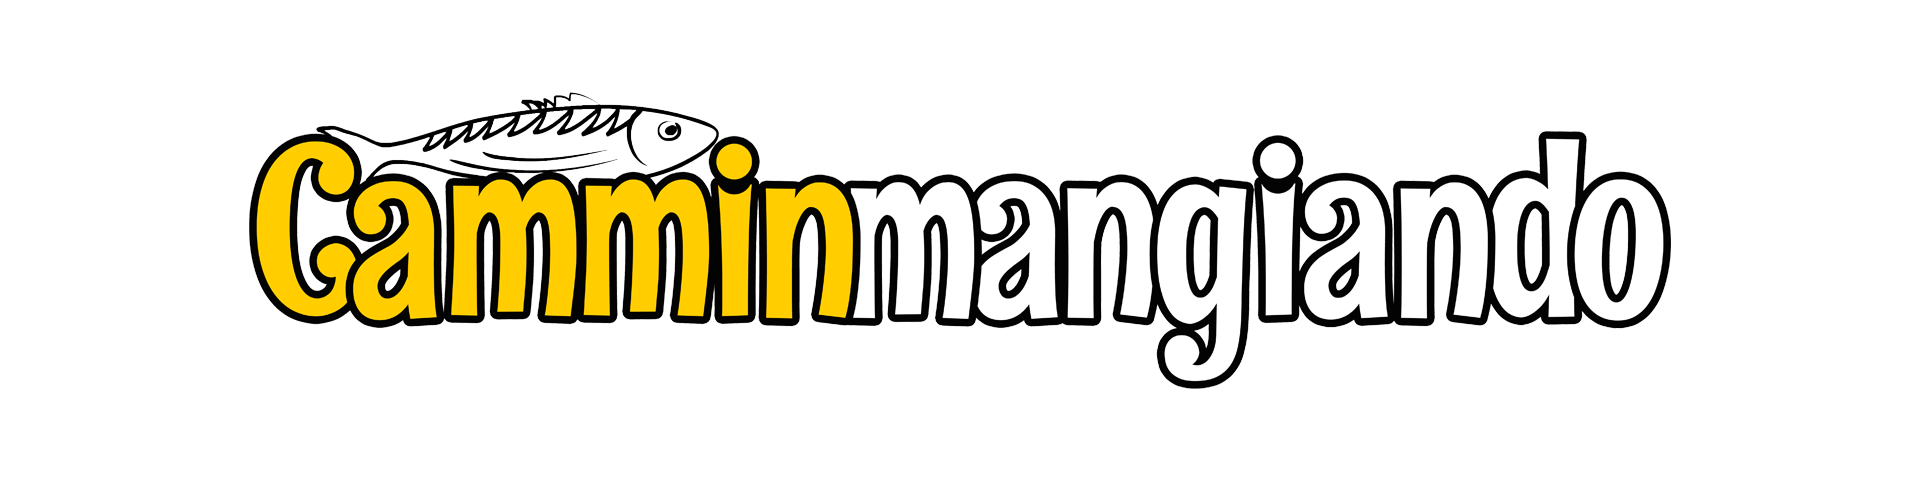 banner-camminmangiando